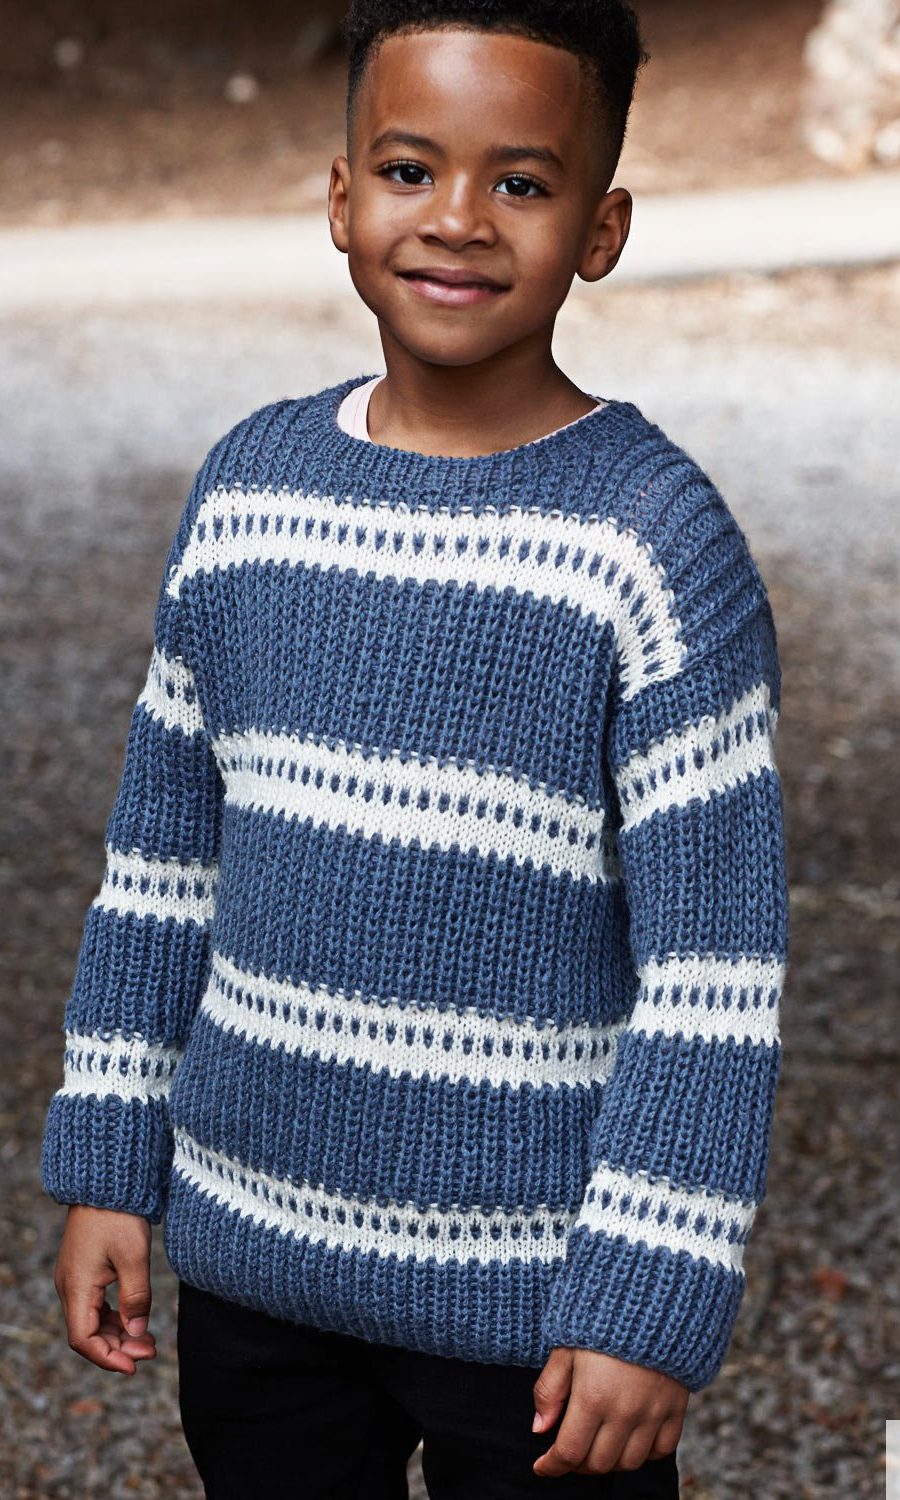 pattern-knit-crochet-kids-sweater-autumn-winter-katia-6138-15-g